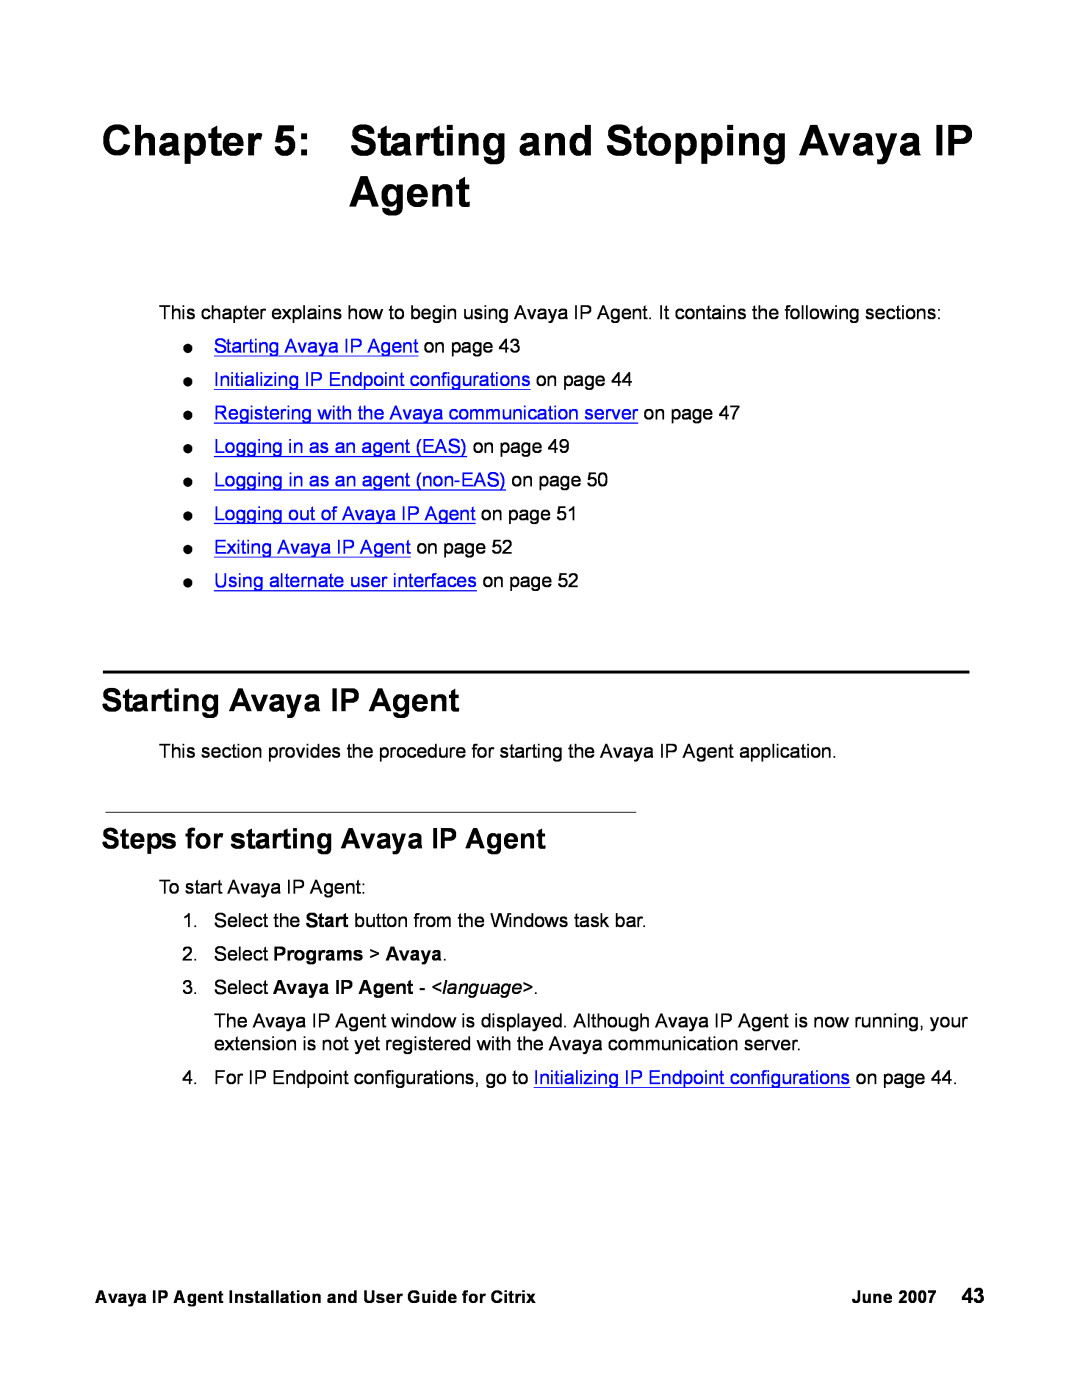 Avaya 7 manual Starting and Stopping Avaya IP Agent, Starting Avaya IP Agent, Steps for starting Avaya IP Agent 